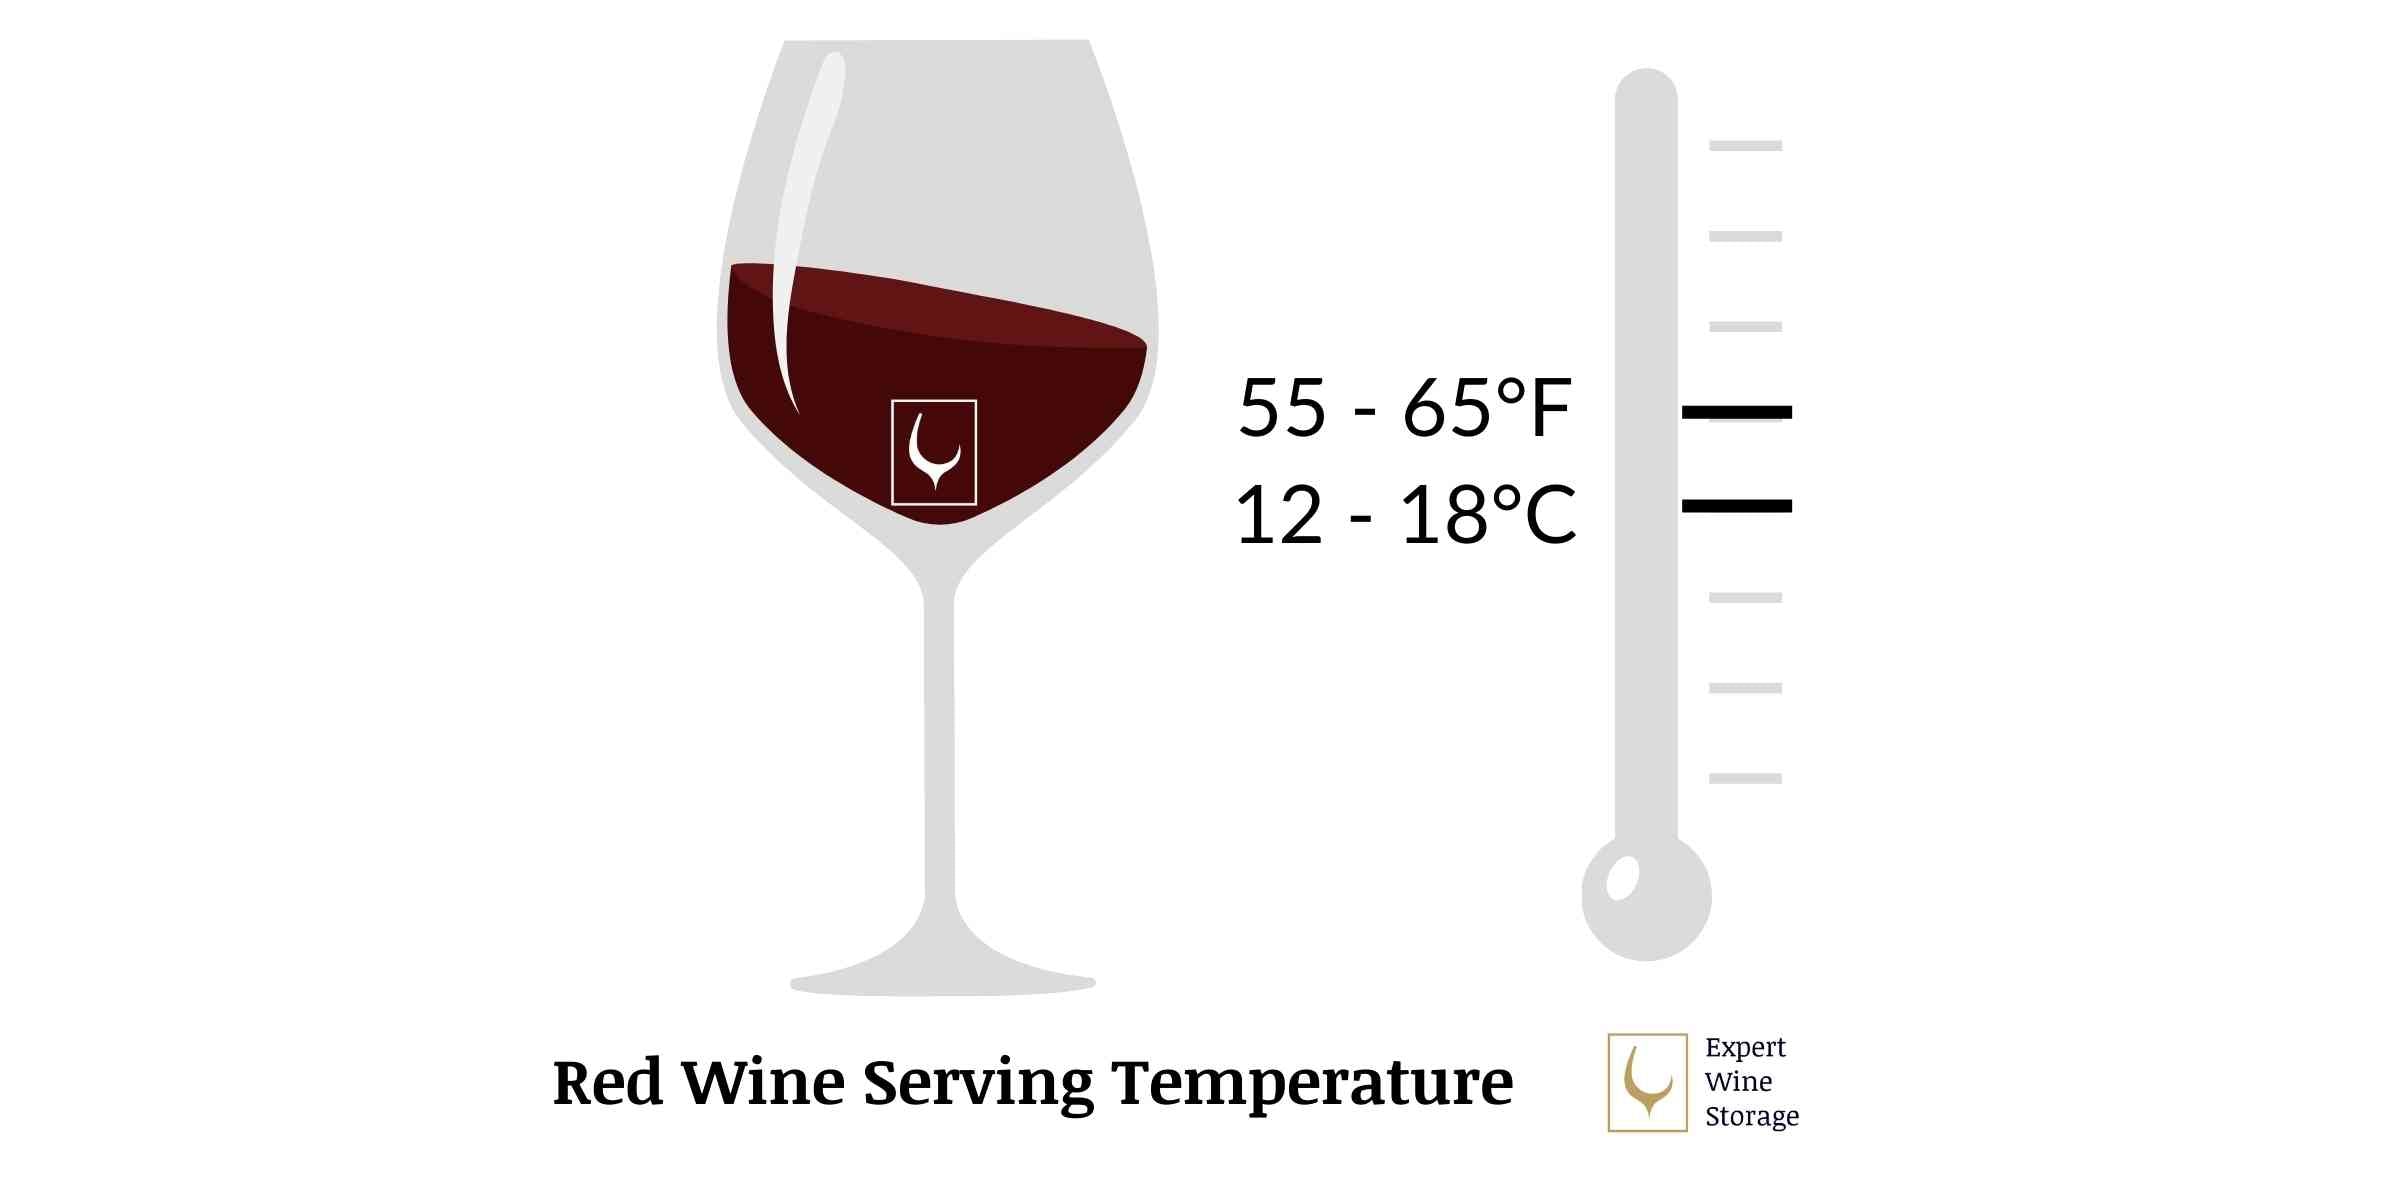 Red Wine Serving Temperature Infographic